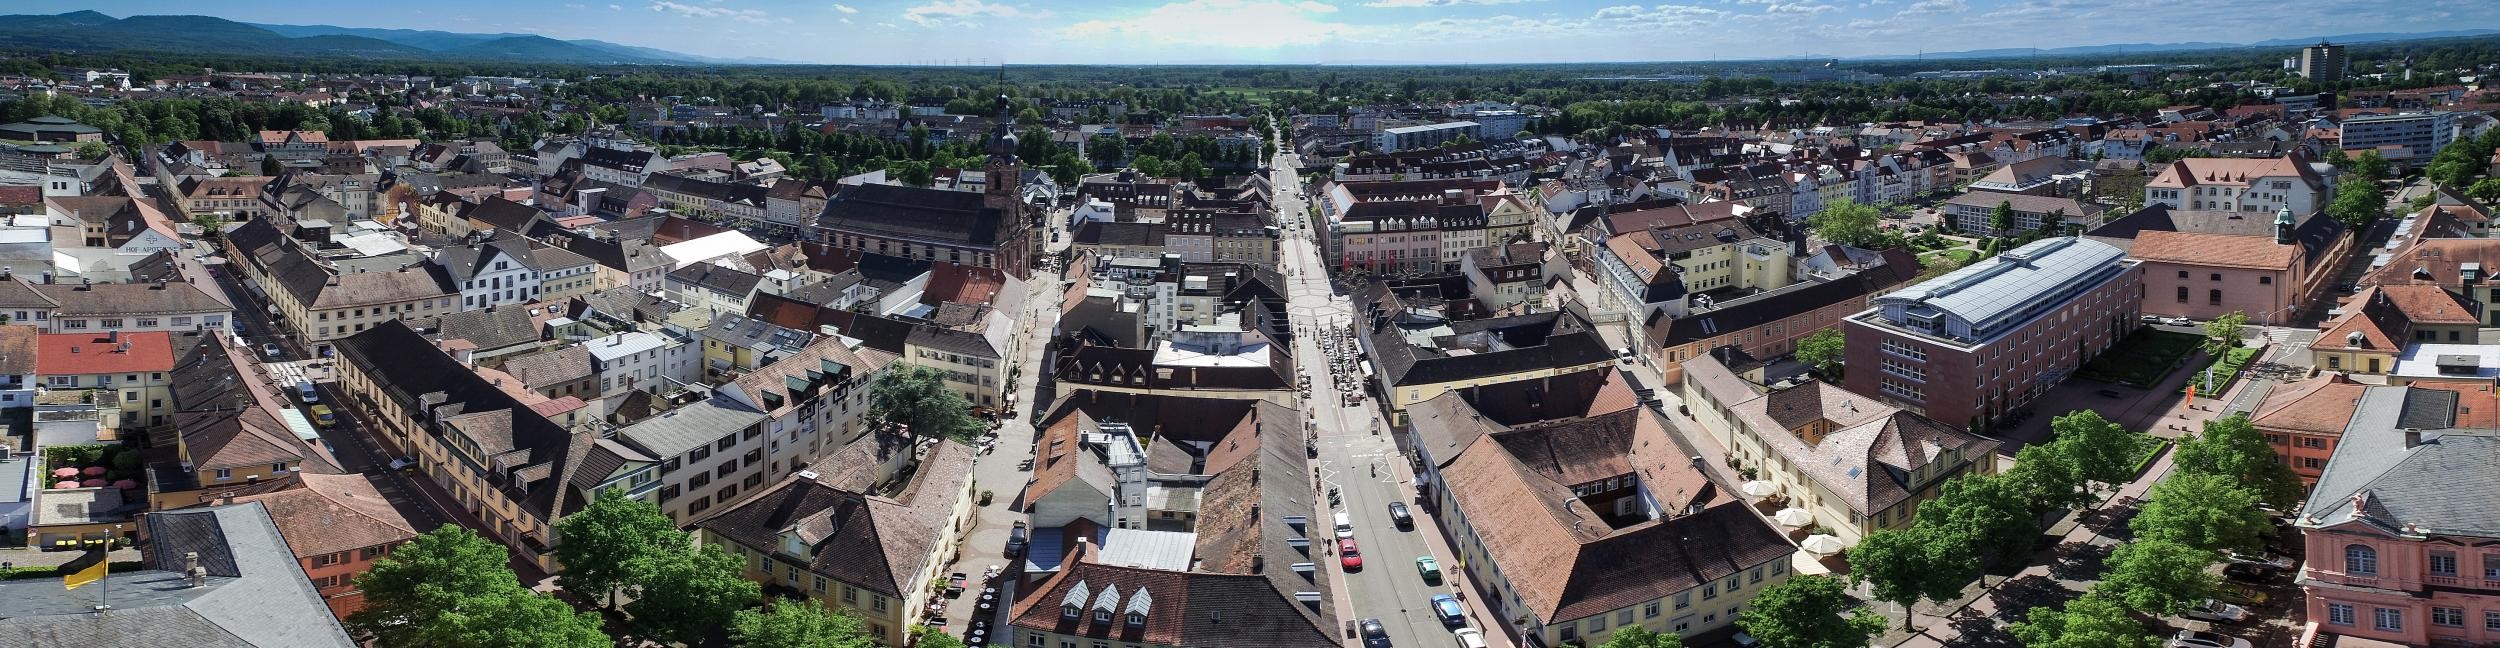 Aerial view of Rastatt city center from above